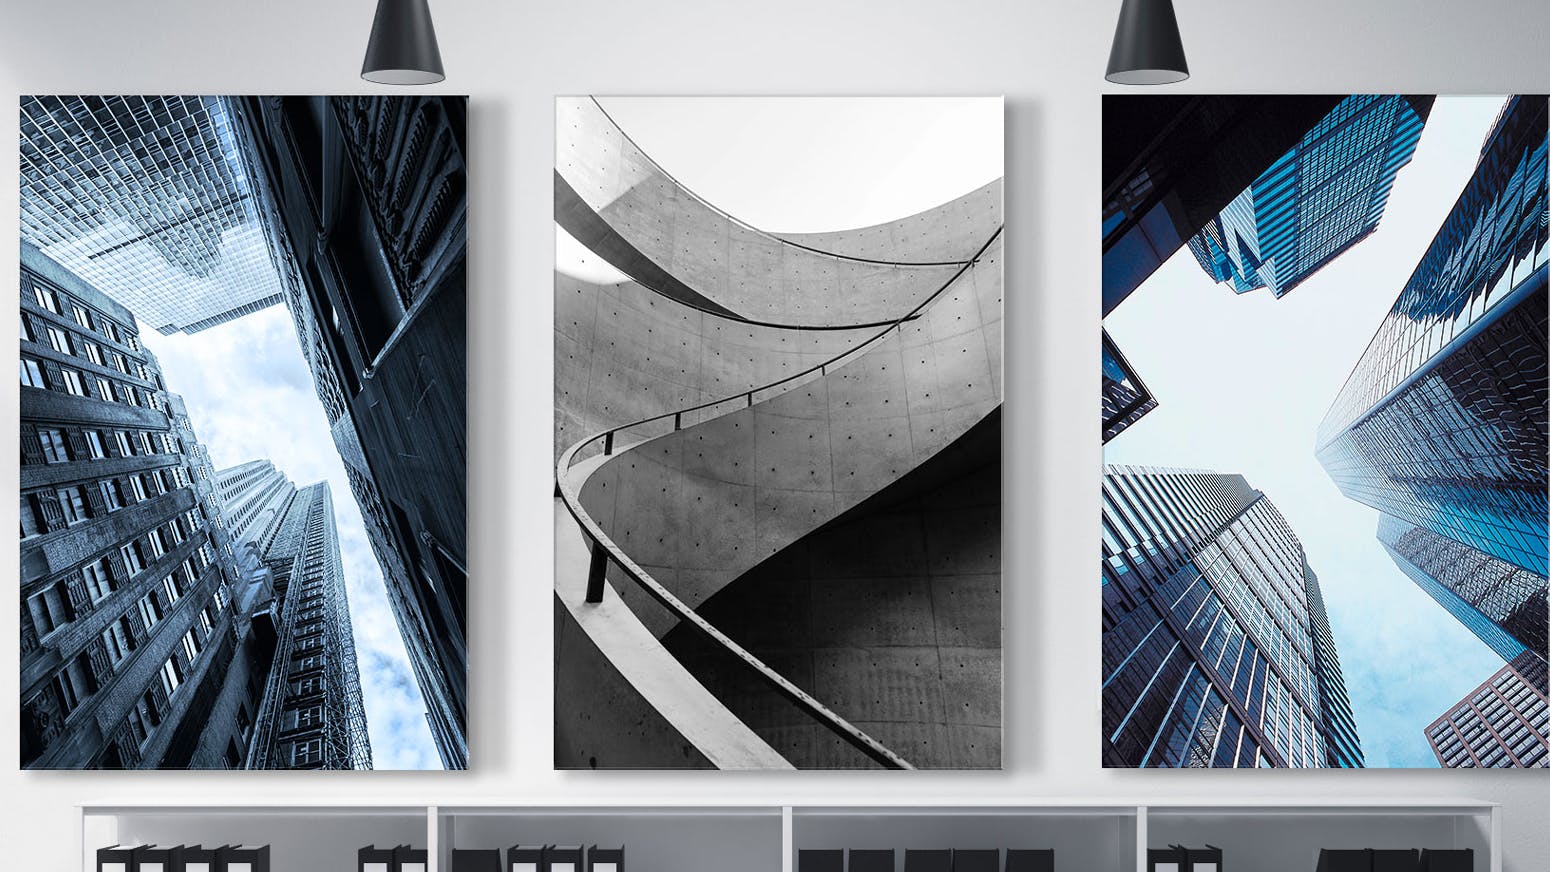 Grote acrylglasfoto met architectuurfoto's in een kantoor